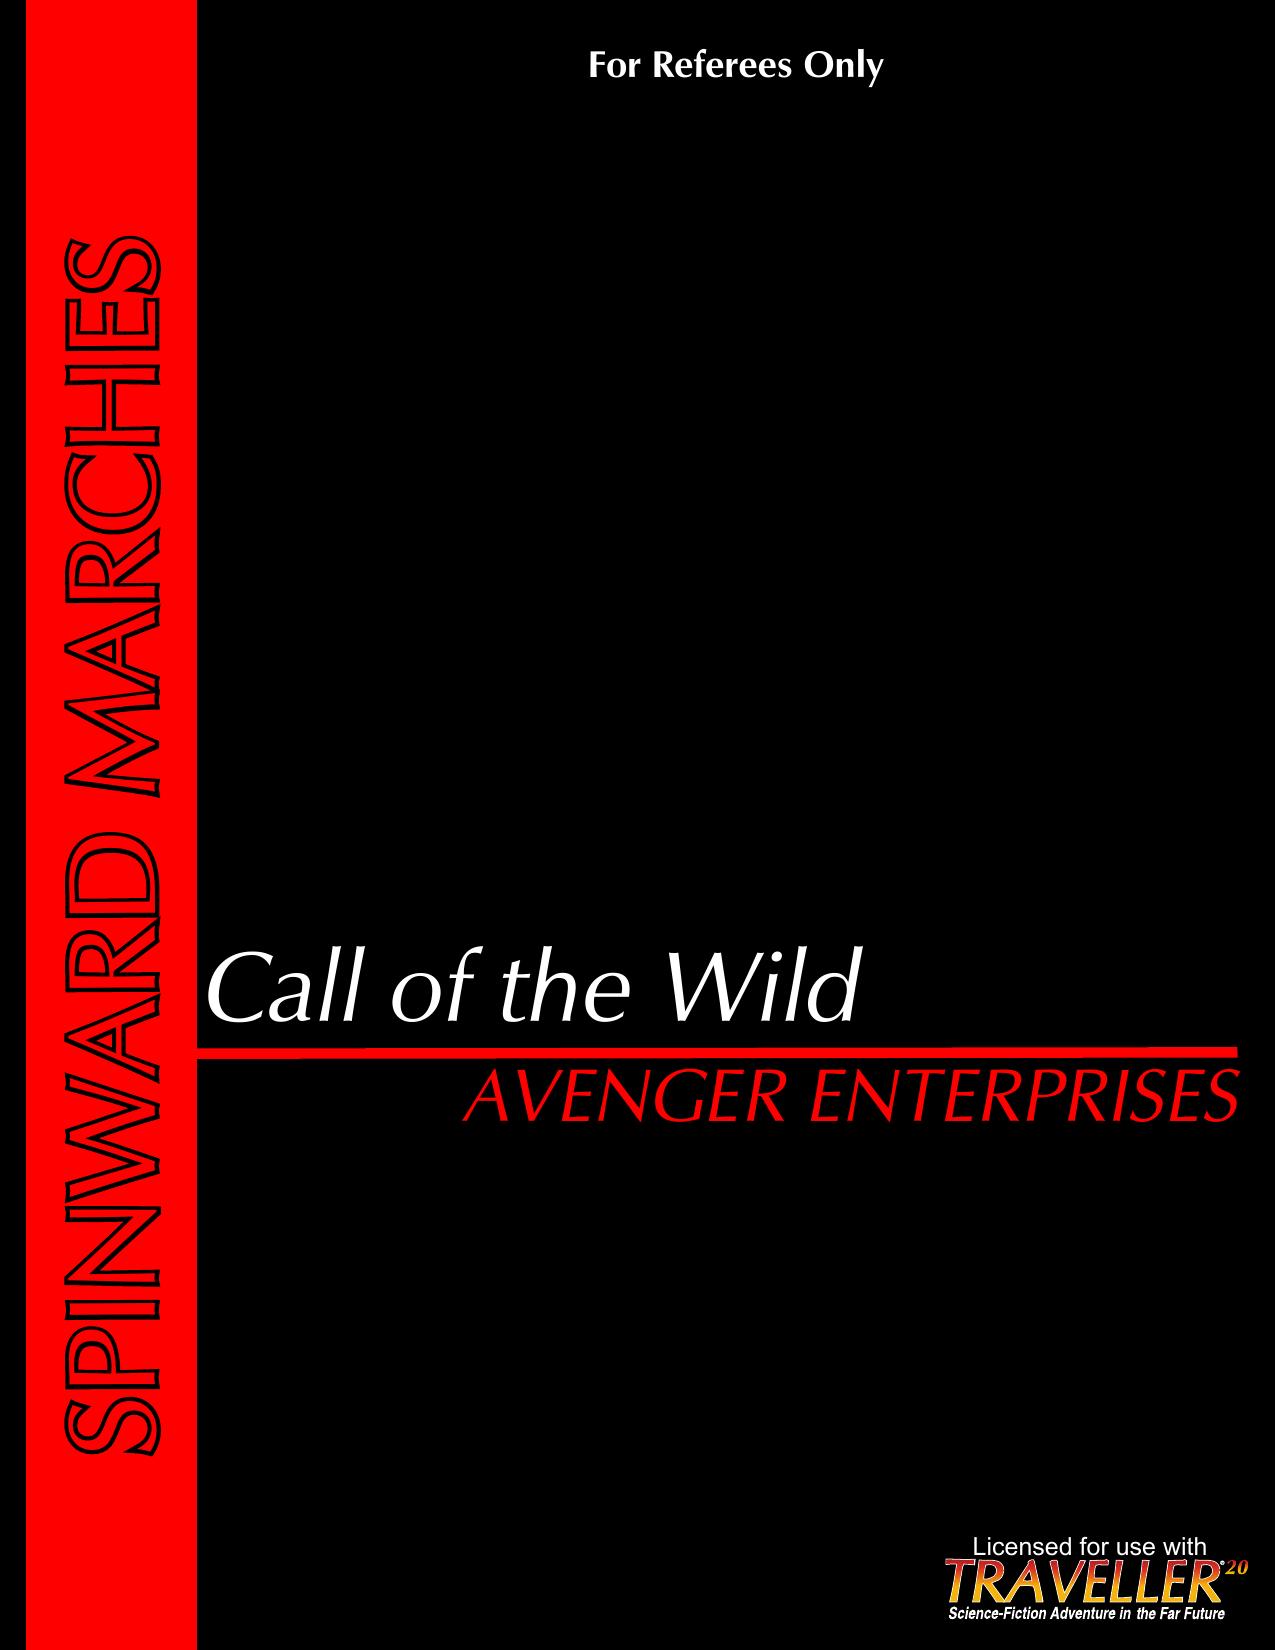 Call of the Wild (Avengers Enterprises)